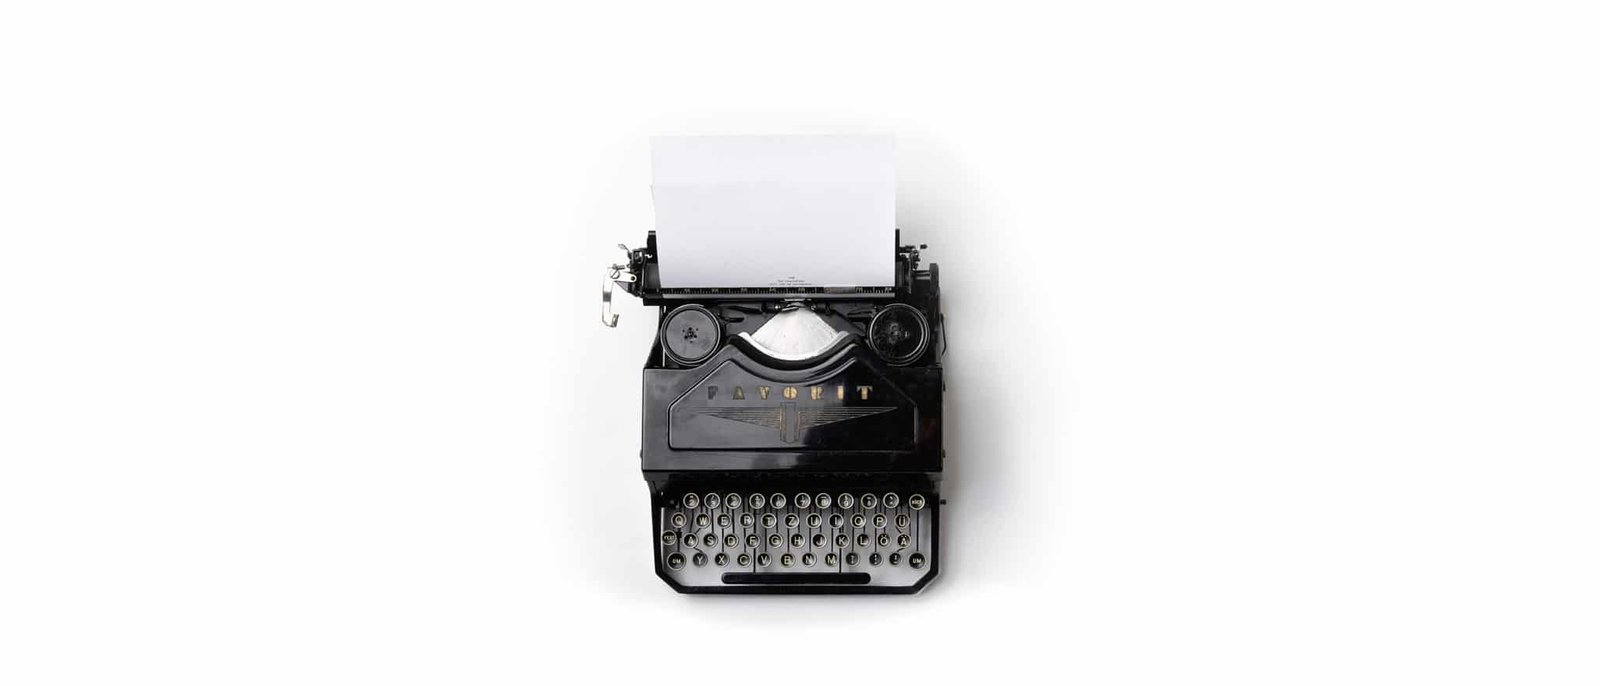 agencia de viajes cabo verde documentación legal máquina de escribir